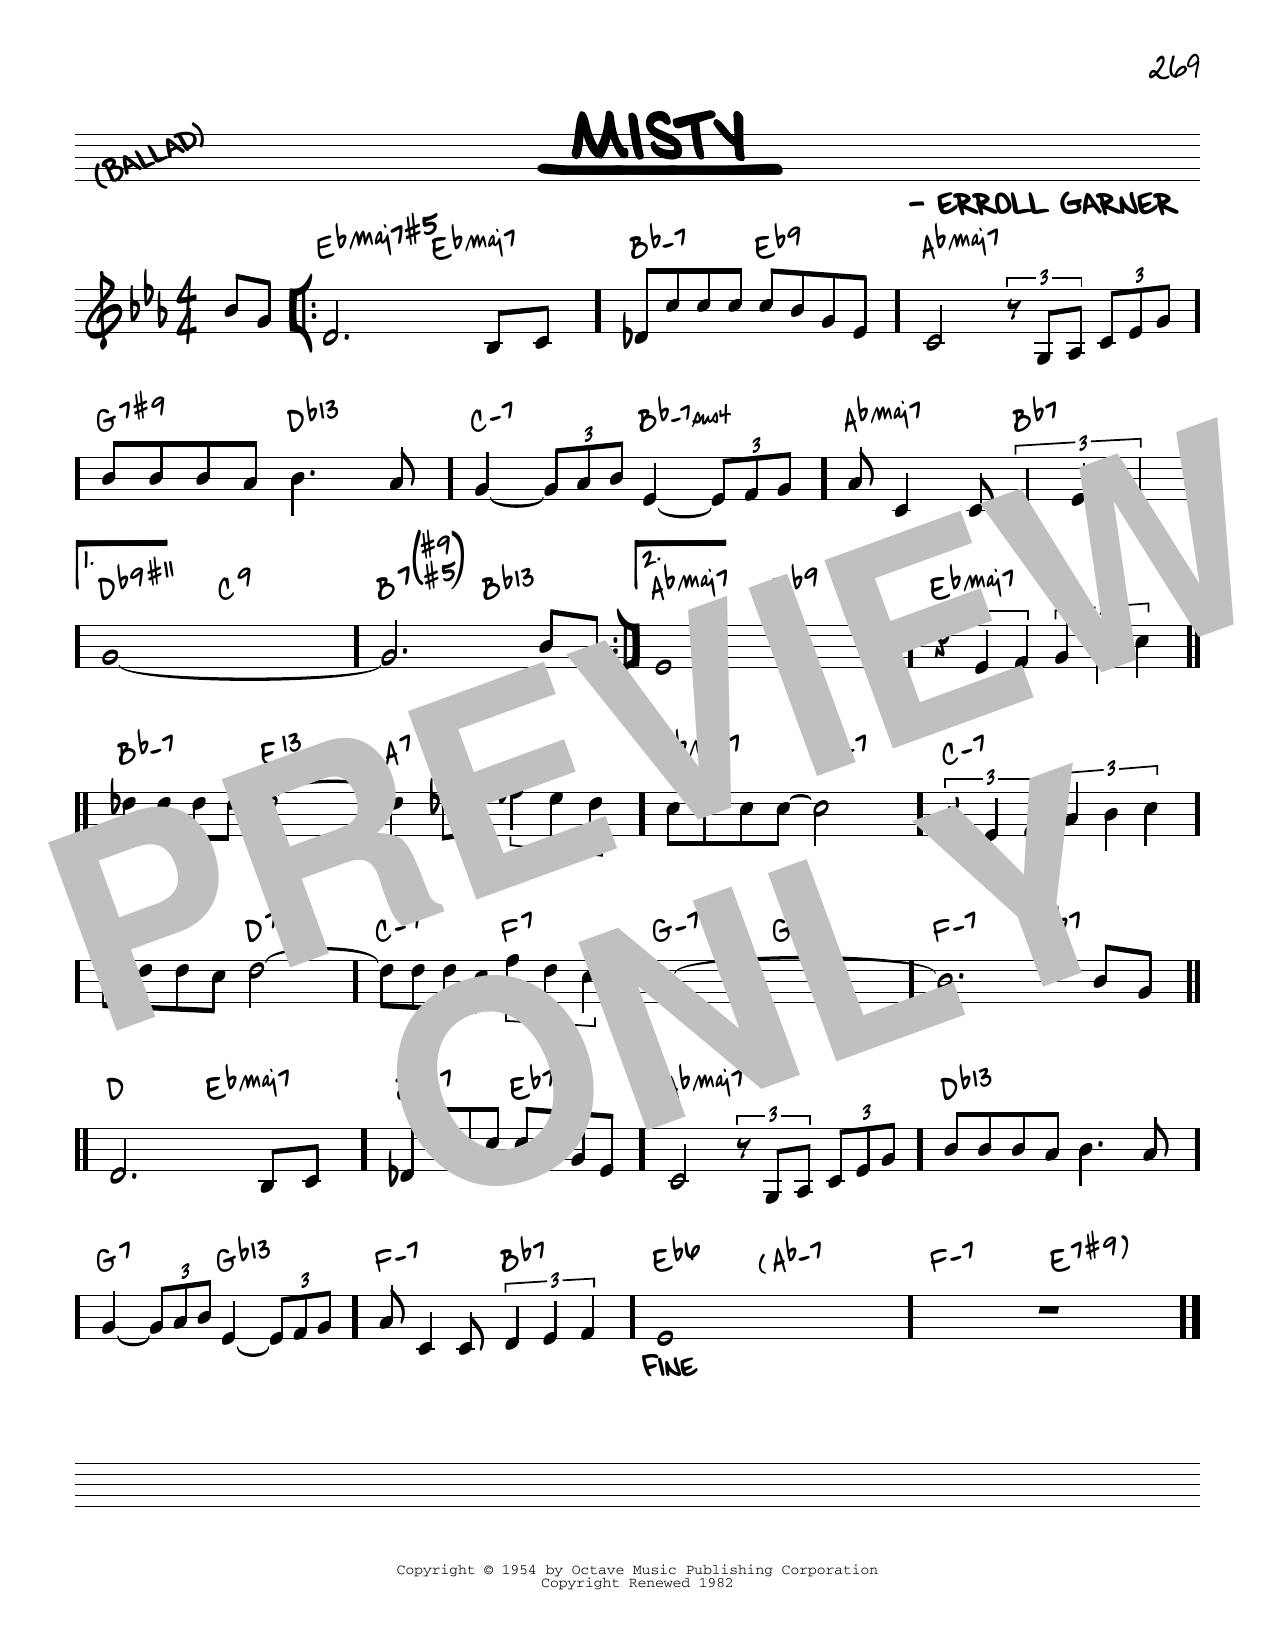 Erroll Garner Misty [Reharmonized version] (arr. Jack Grassel) Sheet Music Notes & Chords for Real Book – Melody & Chords - Download or Print PDF